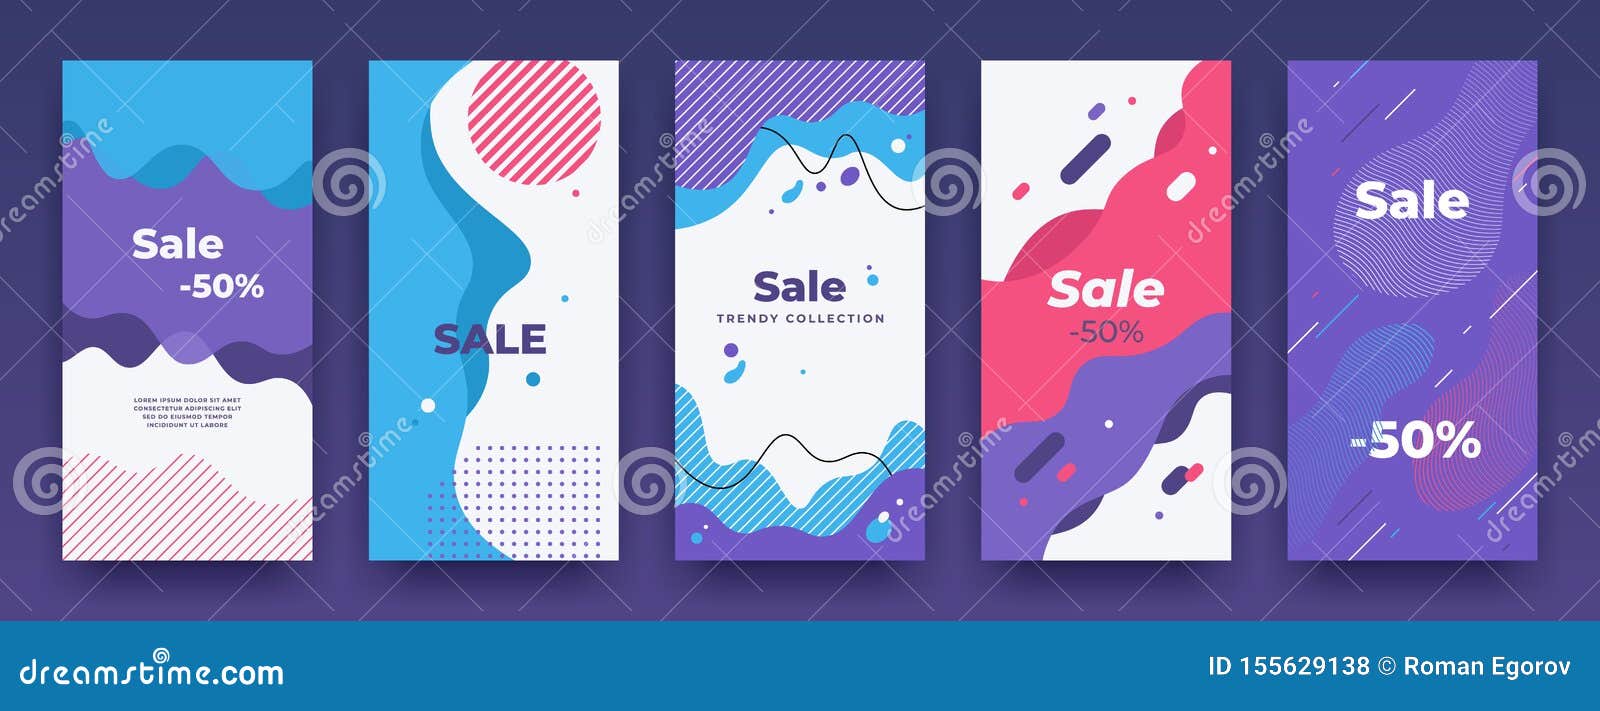 social media banner. story sale swipe up template, sale price vertical poster pack, mobile app promo.  landing